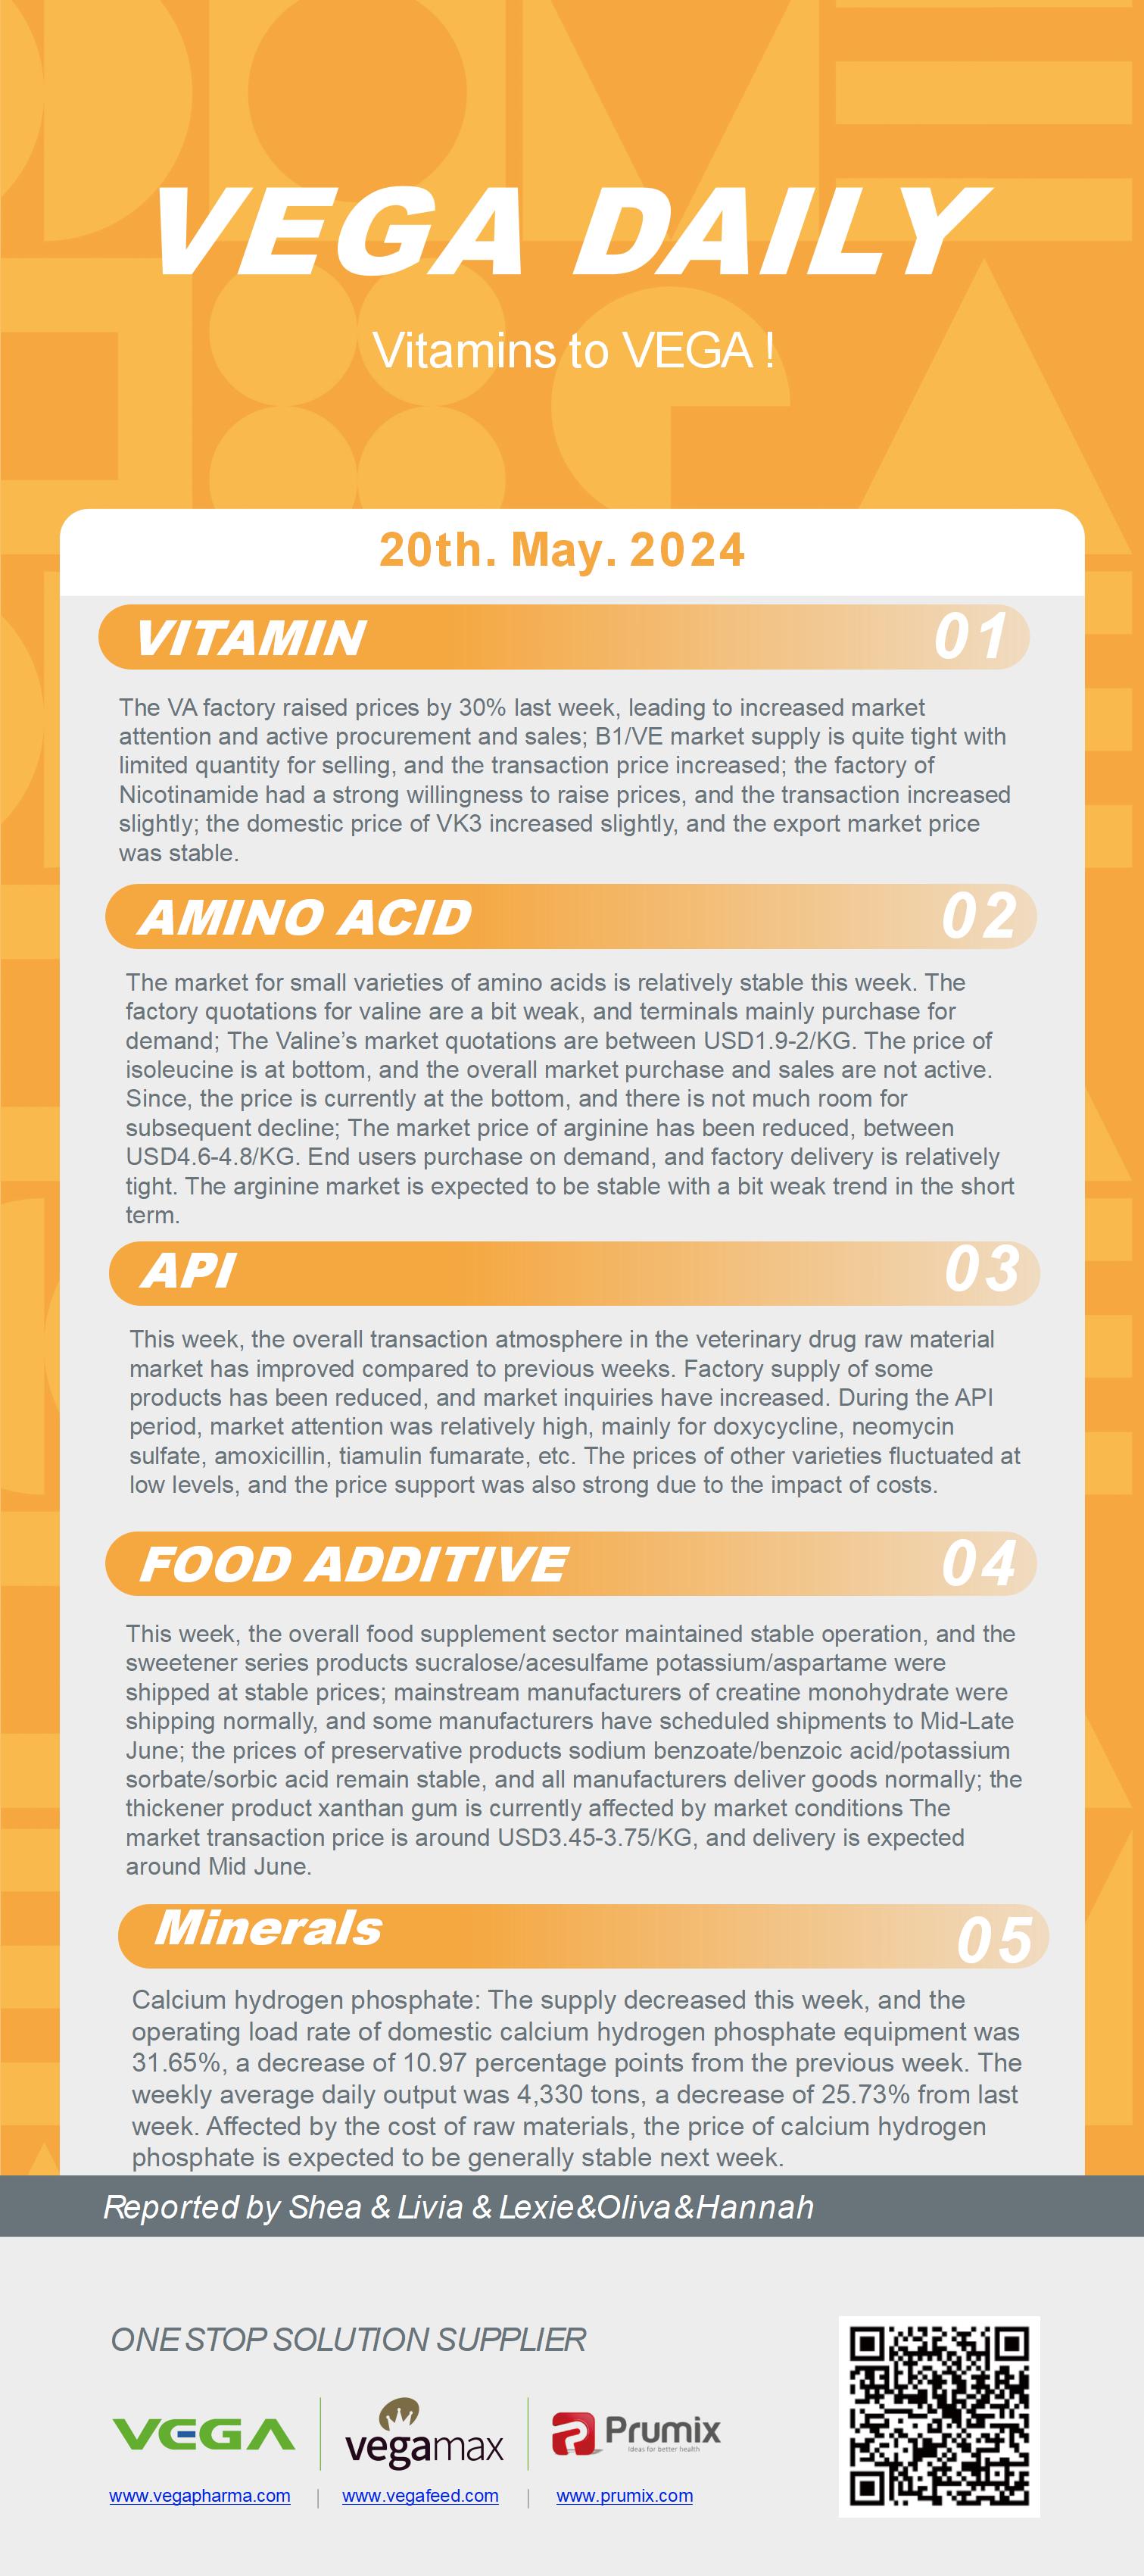 Vega Daily Dated on May 20th 2024 Vitamin Amino Acid APl Food Additives.jpg